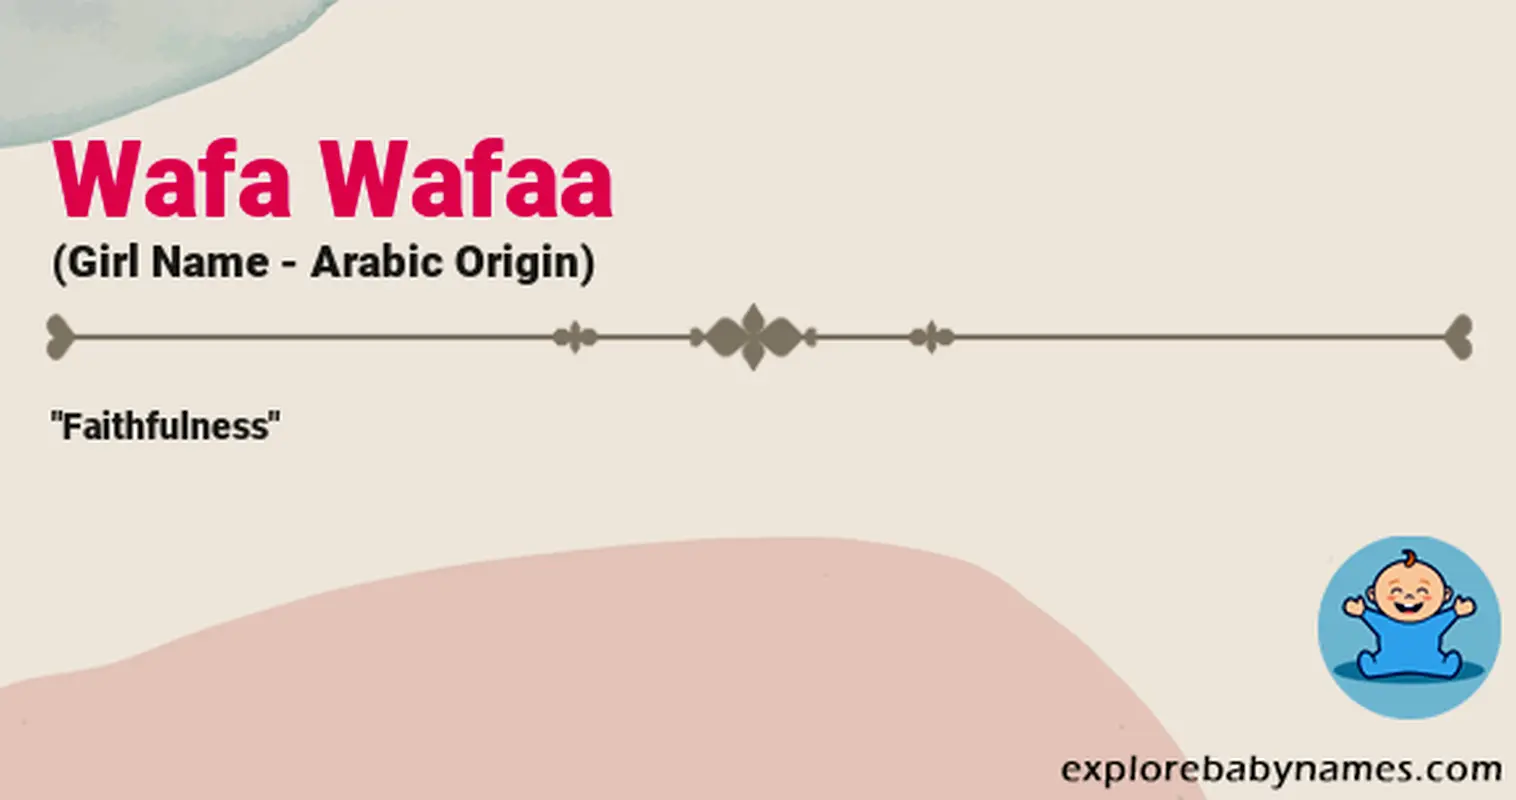 Meaning of Wafa Wafaa